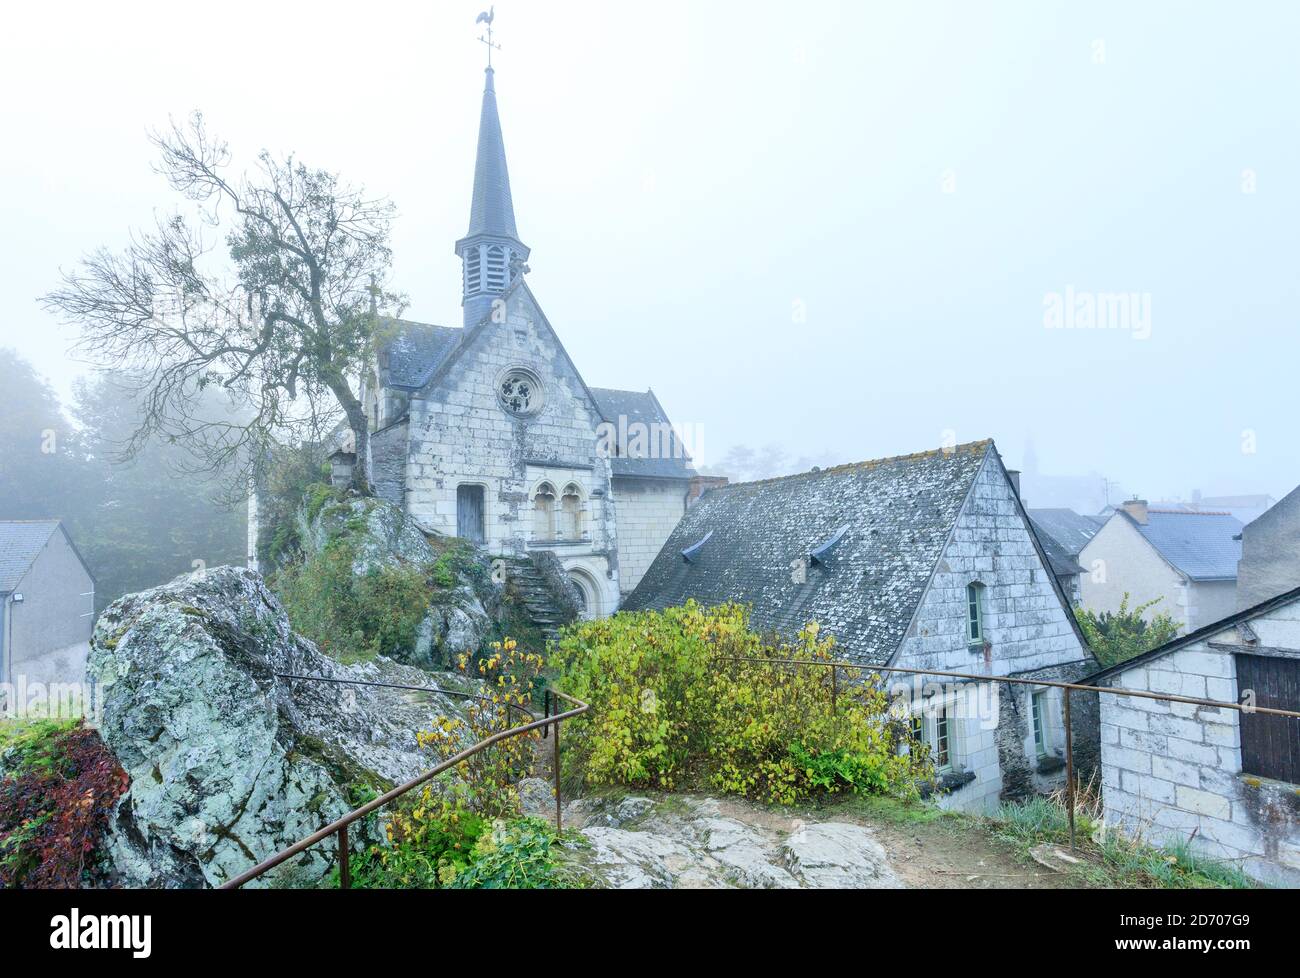 France, Maine et Loire, Loire Valley listed as World Heritage by UNESCO, Ile de Behuard, Behuard, Notre Dame church built on a rock, place of pilgrima Stock Photo